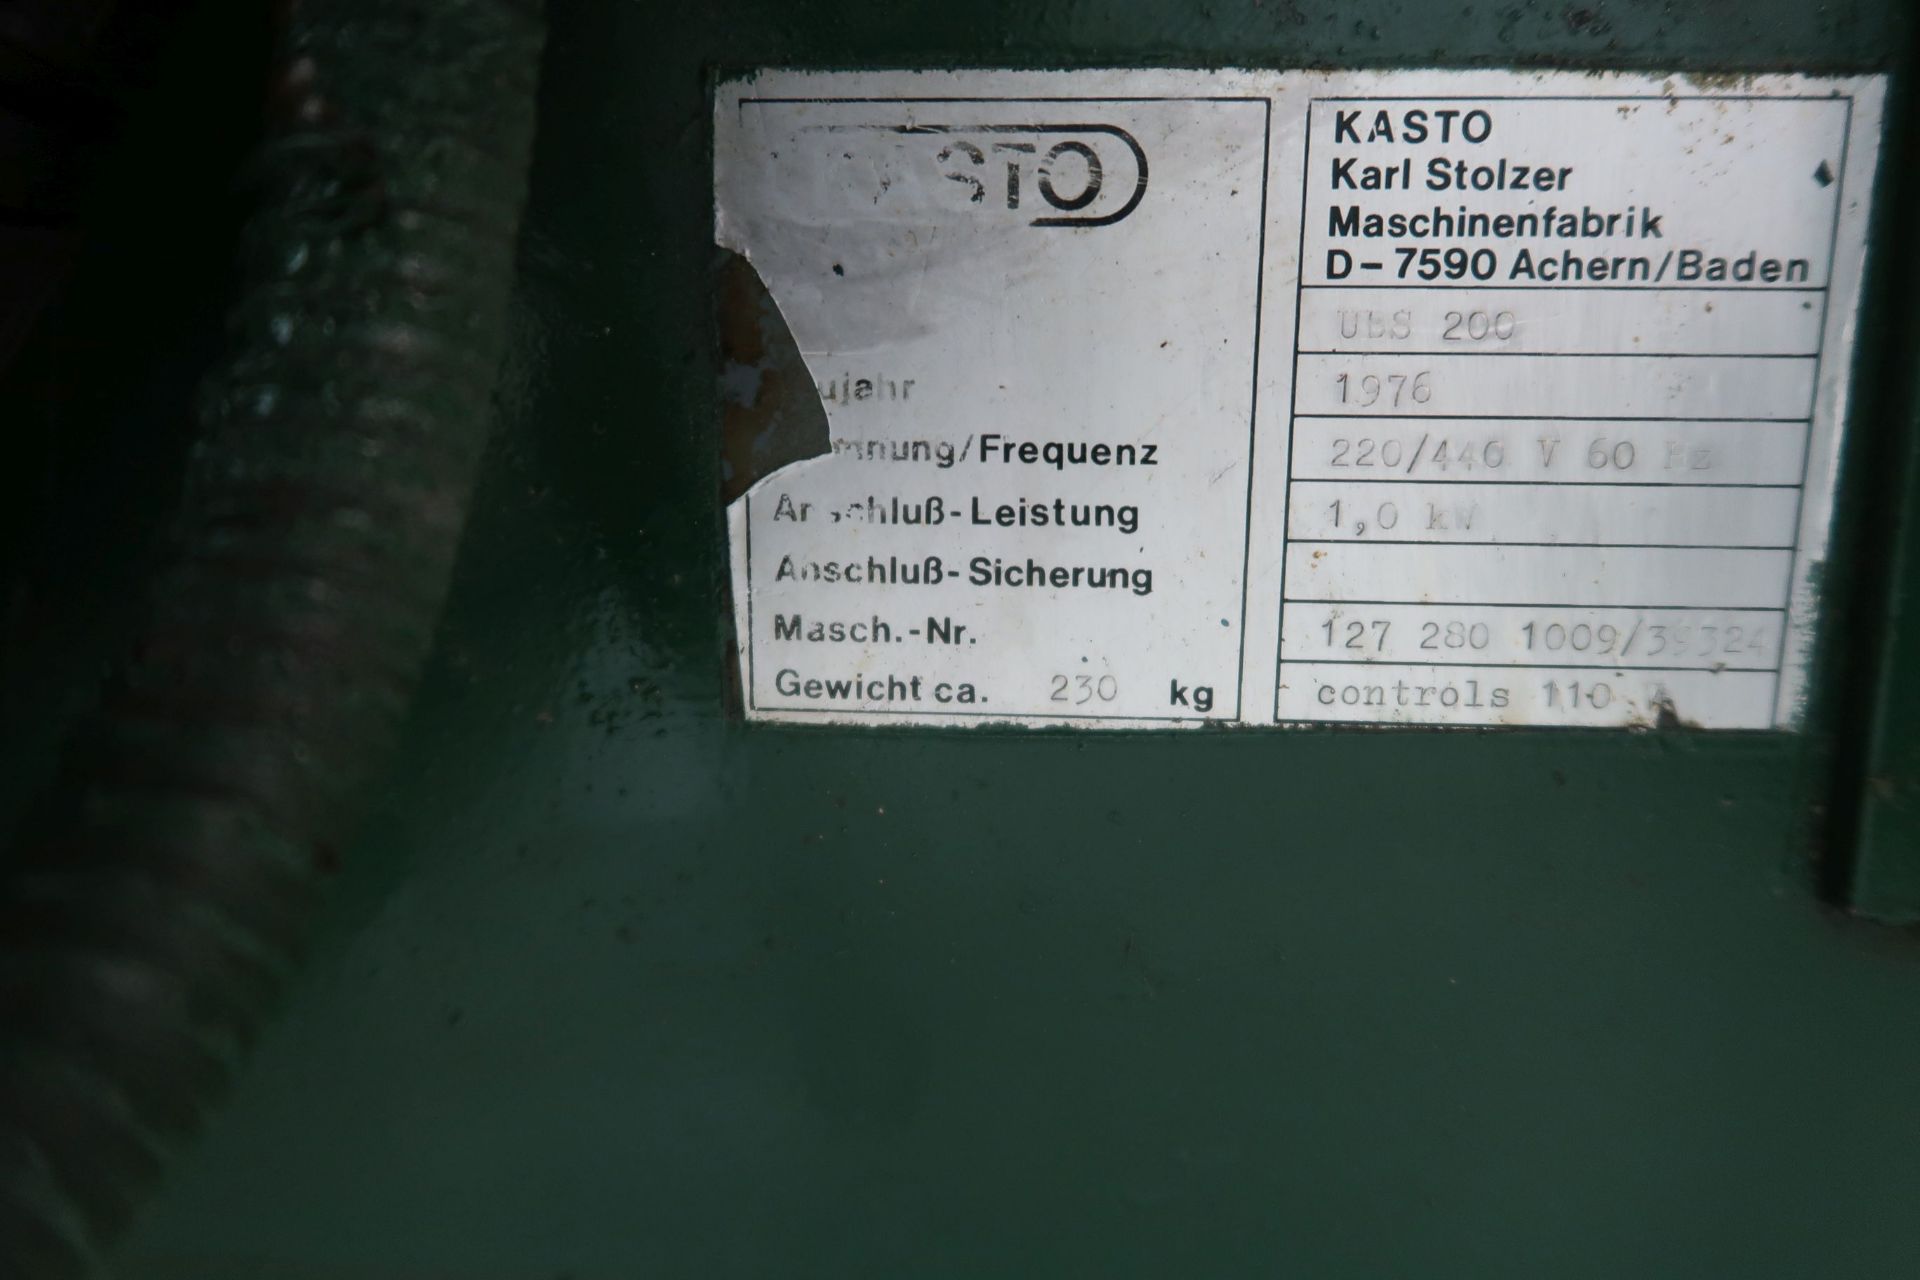 14" KASTO-RACINE MODEL UBS200 RECIPRICATING HACK SAW; S/N 1272801009/39324, WITH (23) BLADES - Image 5 of 6